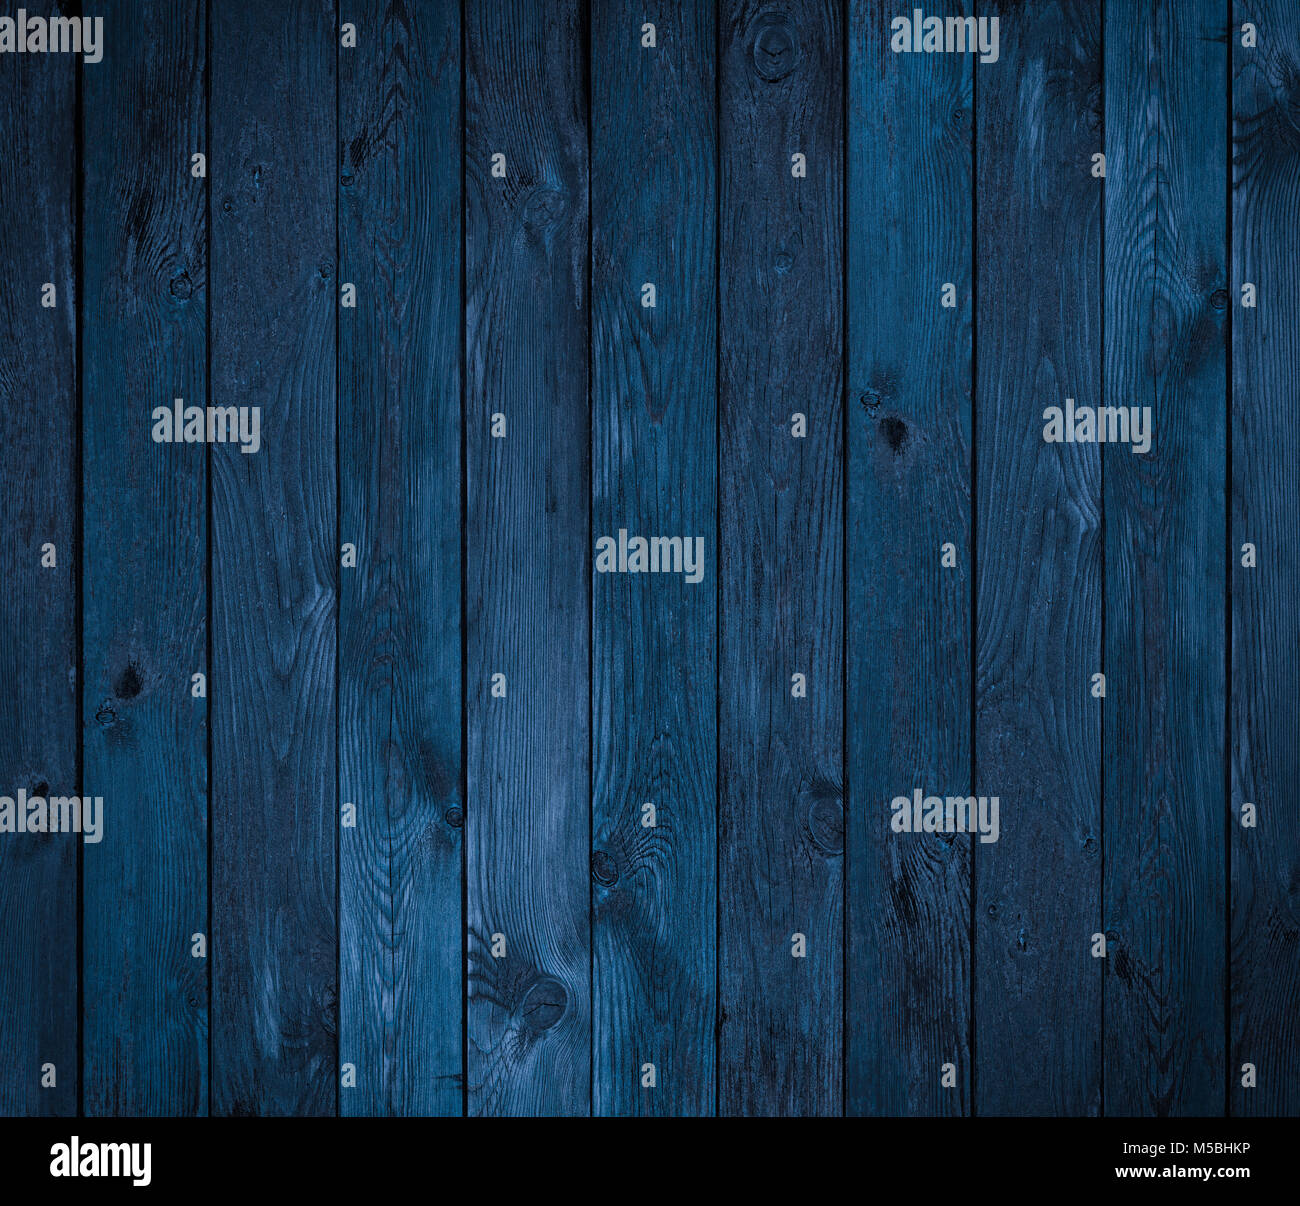 dark blue wood texture or background Stock Photo